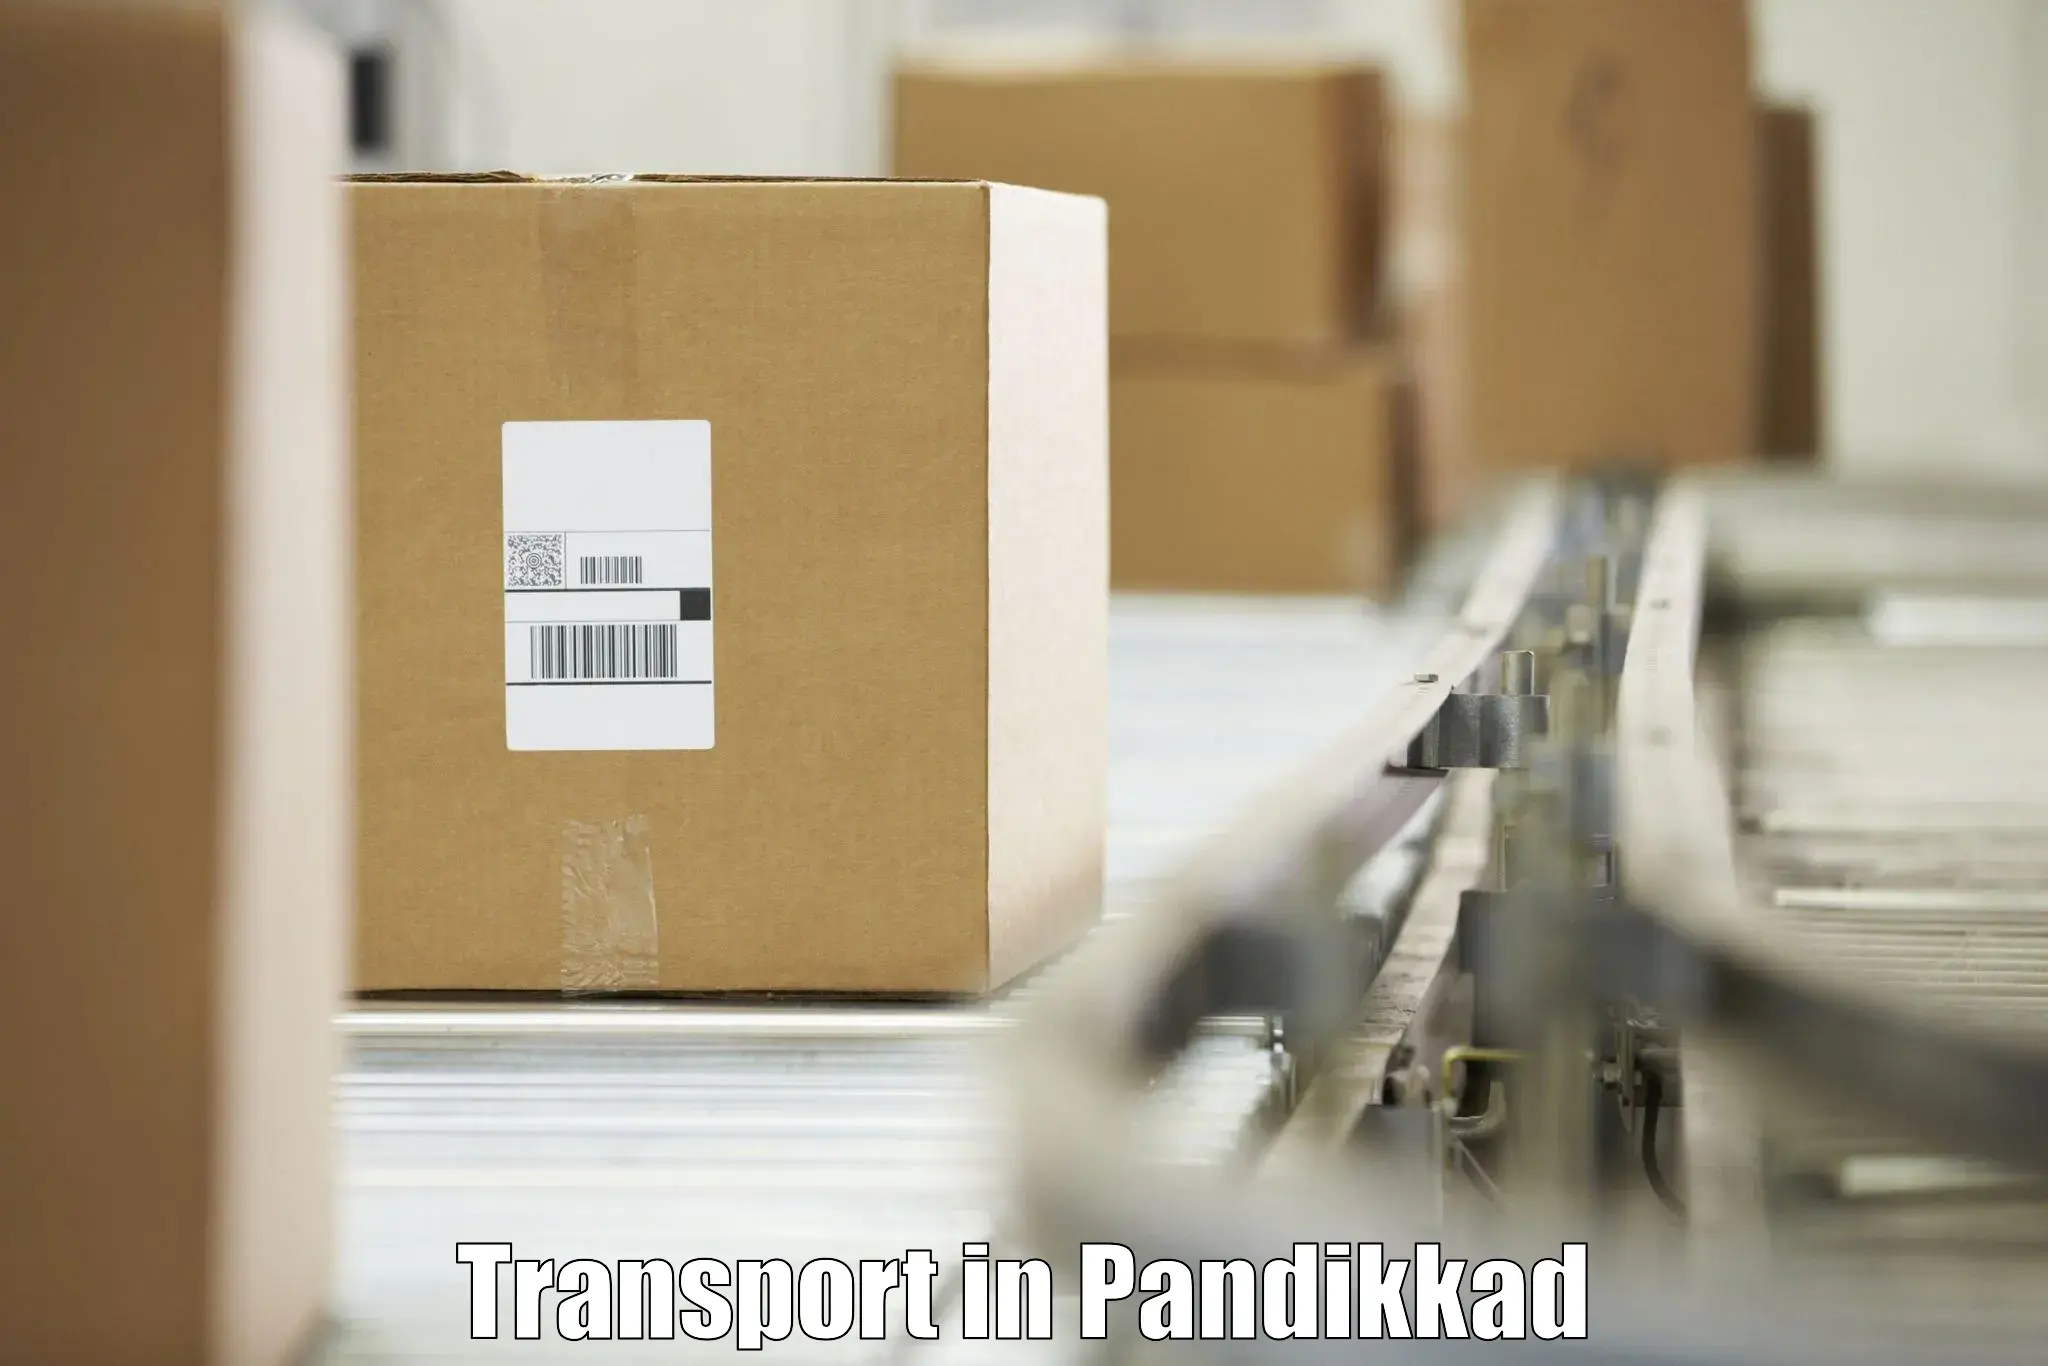 Air freight transport services in Pandikkad